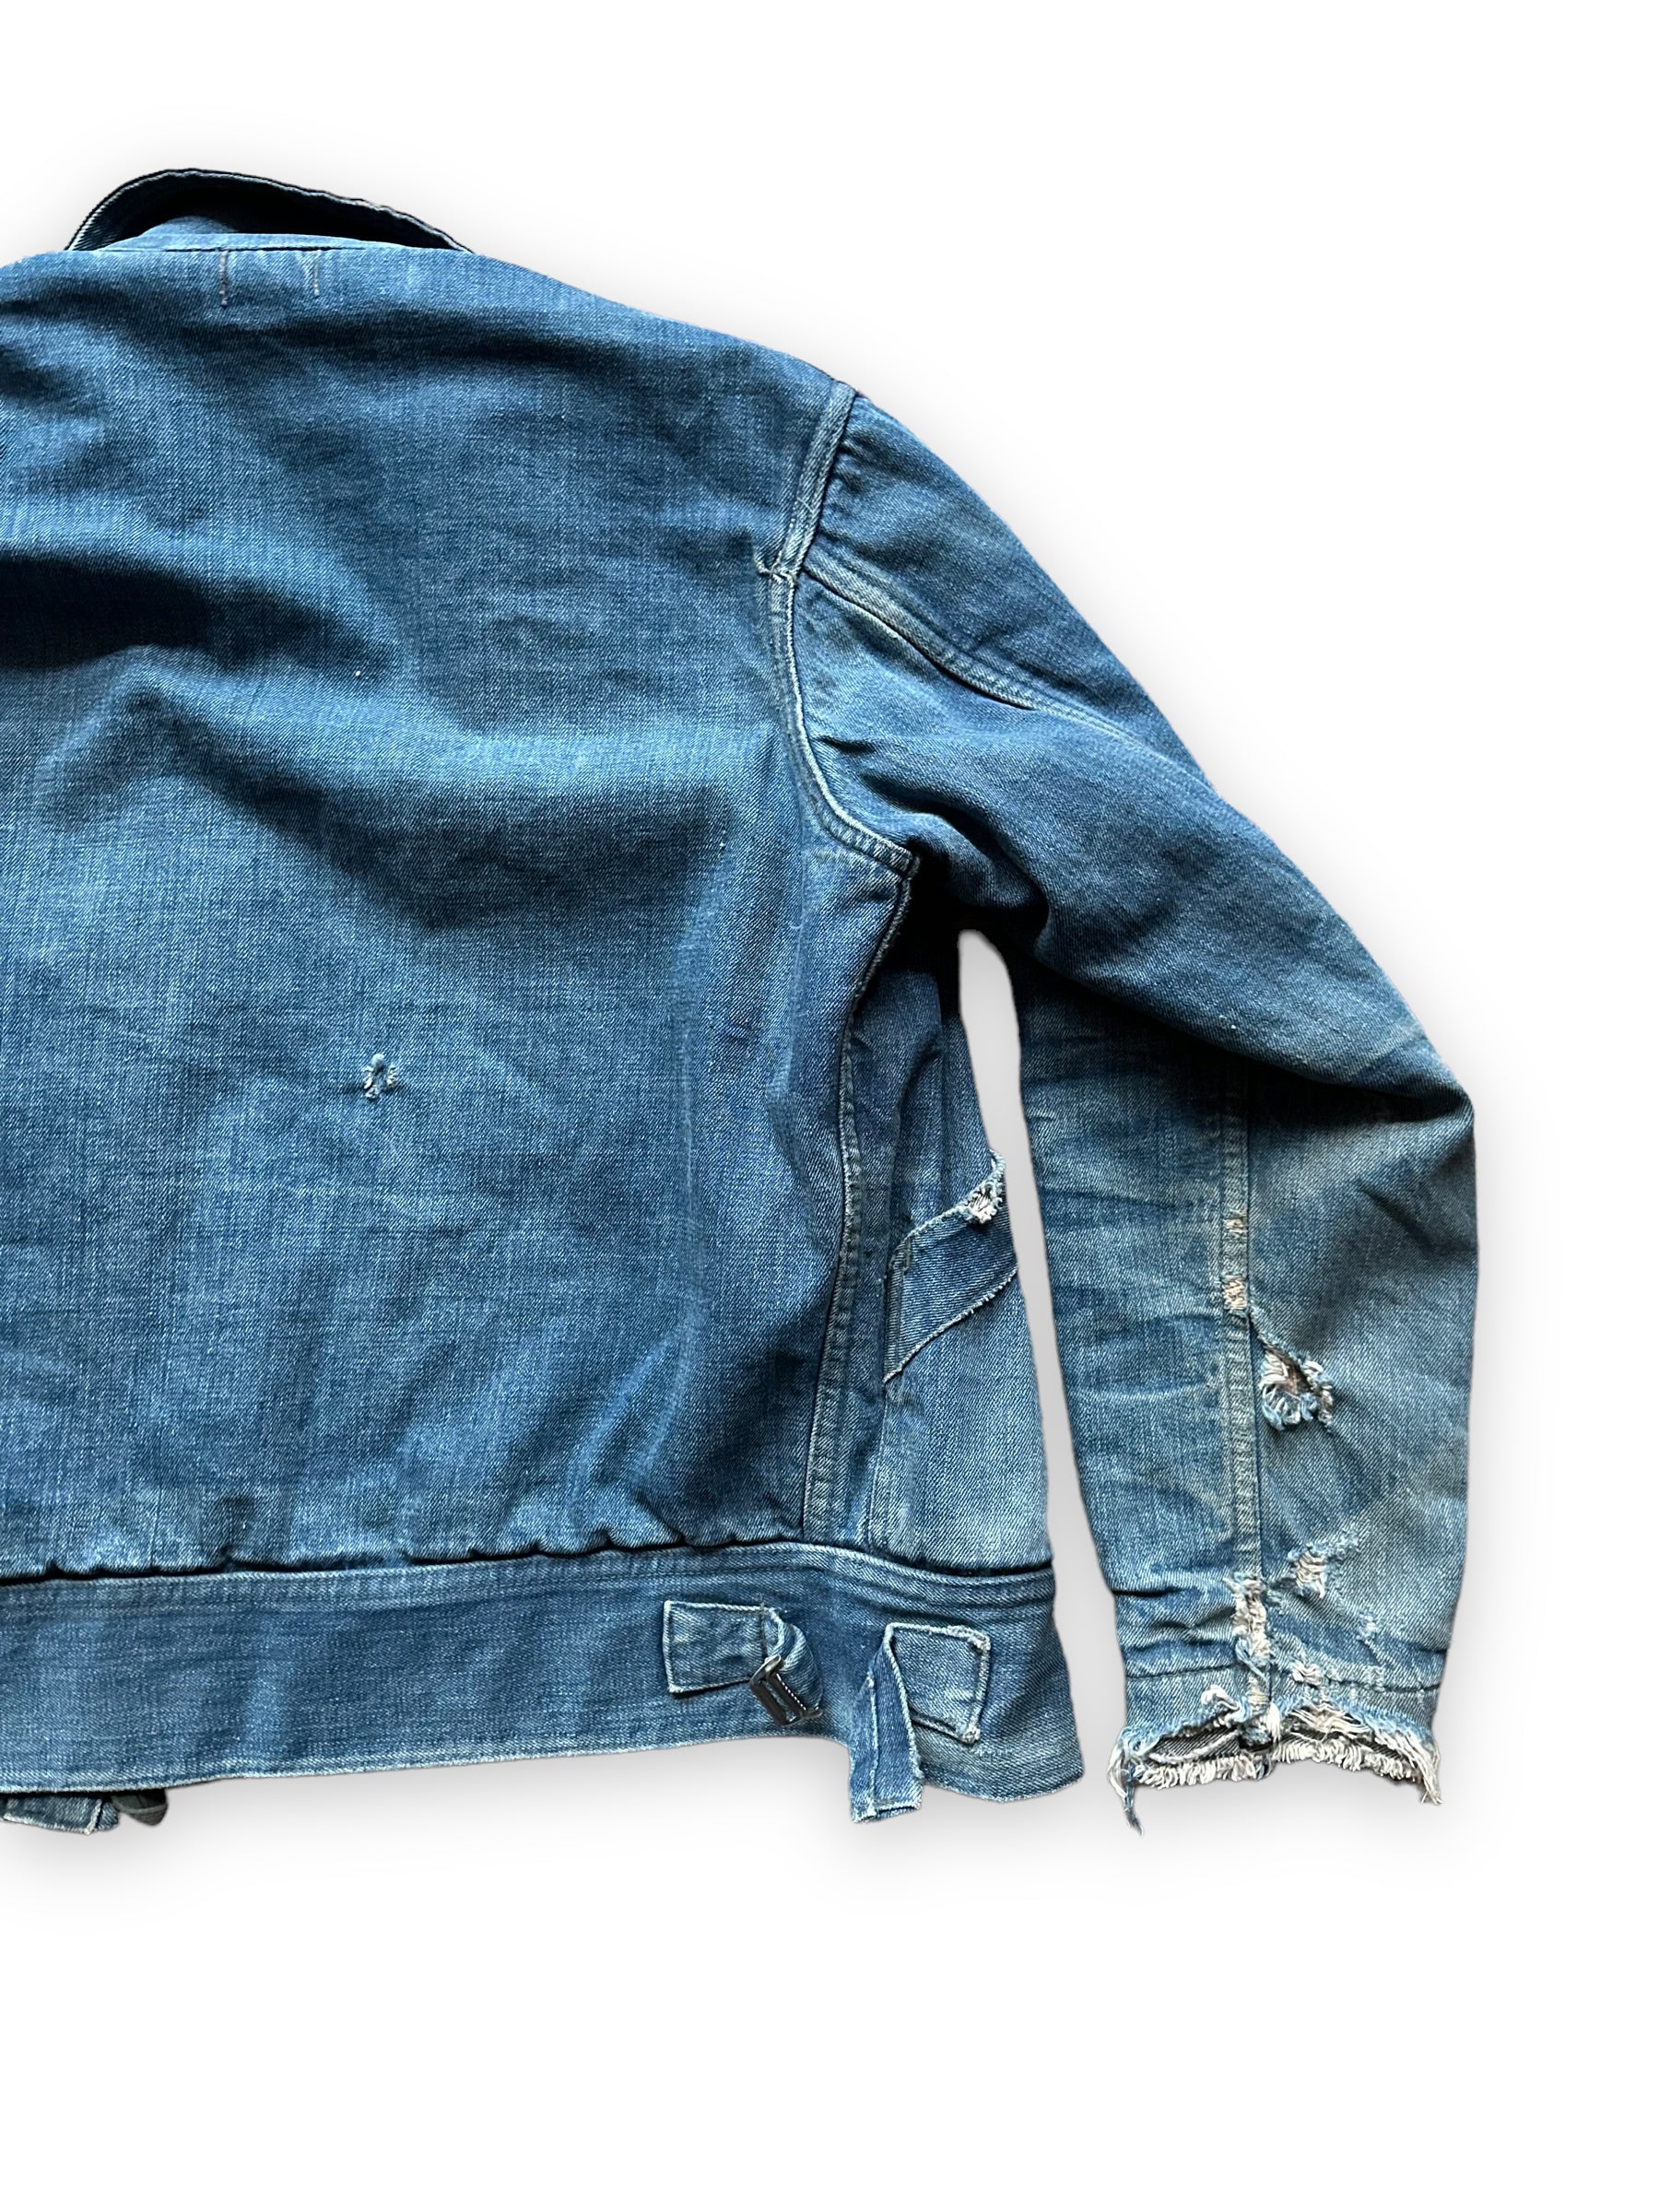 Right Rear View on Vintage Blanket Lined Fitz Denim Jacket | Seattle Vintage Workwear Clothing | Barn Owl Vintage